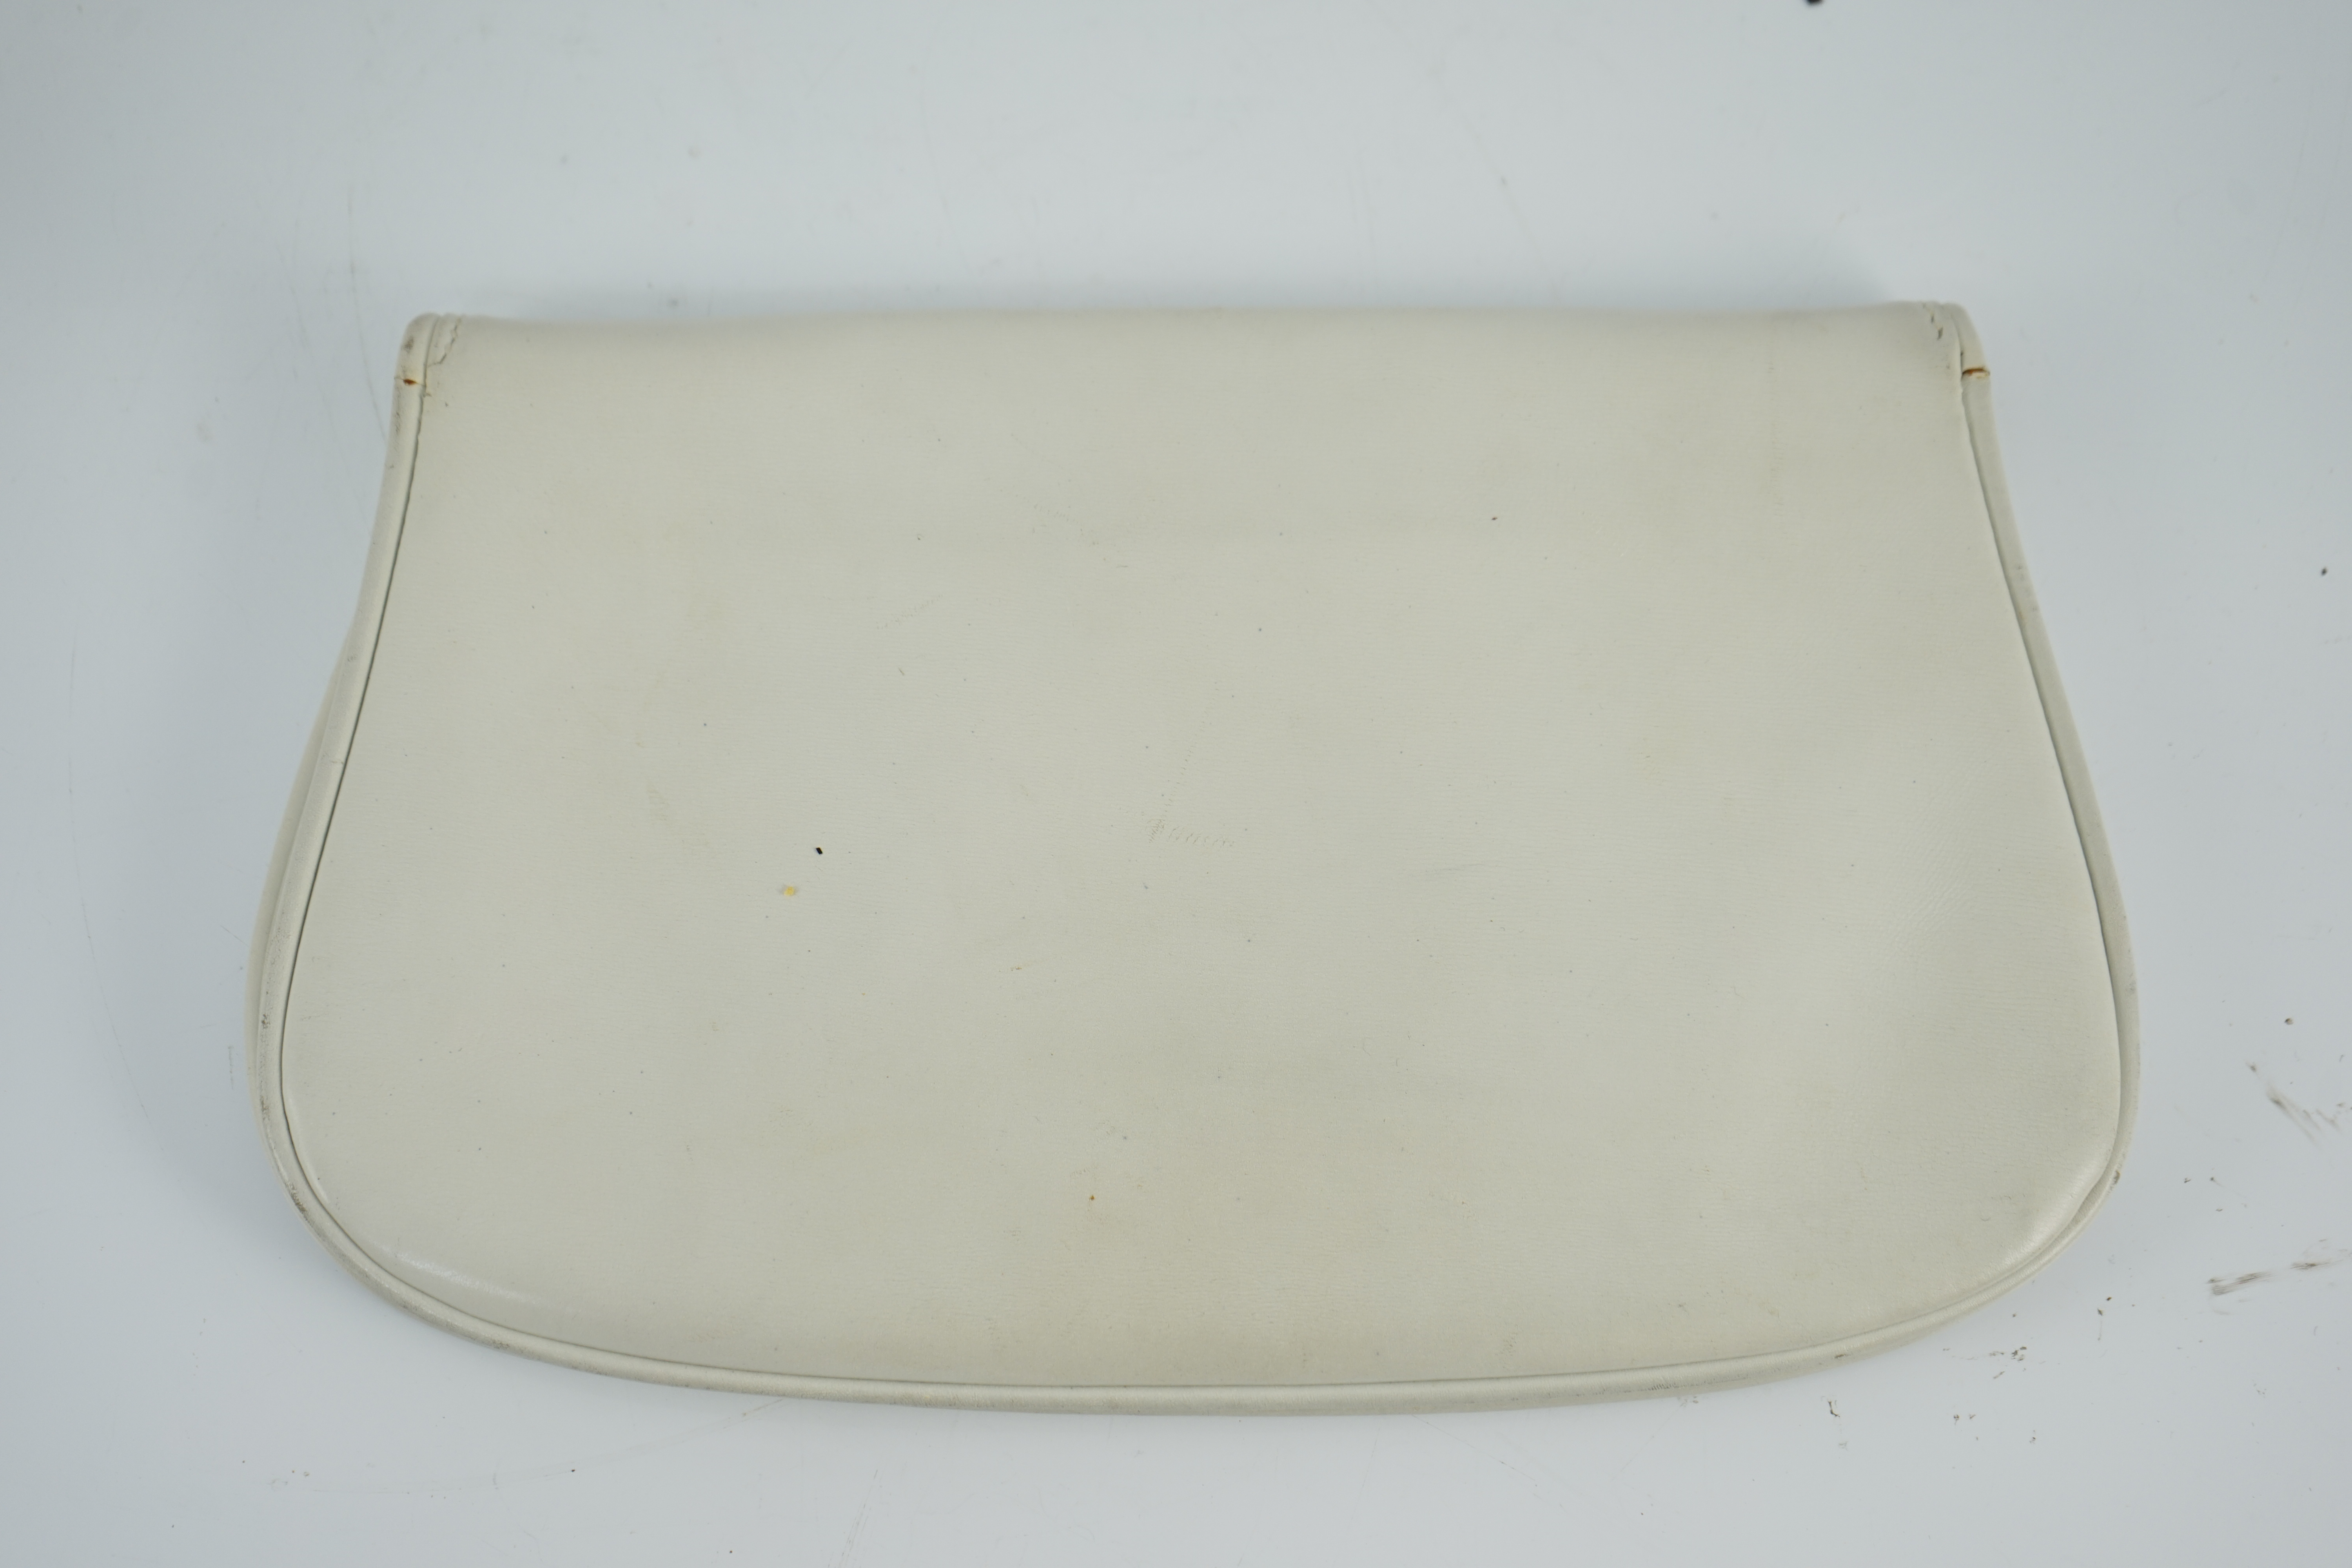 A vintage Gucci Blondie Unicorn white leather clutch bag, width 28cm, depth 4cm, height 16cm